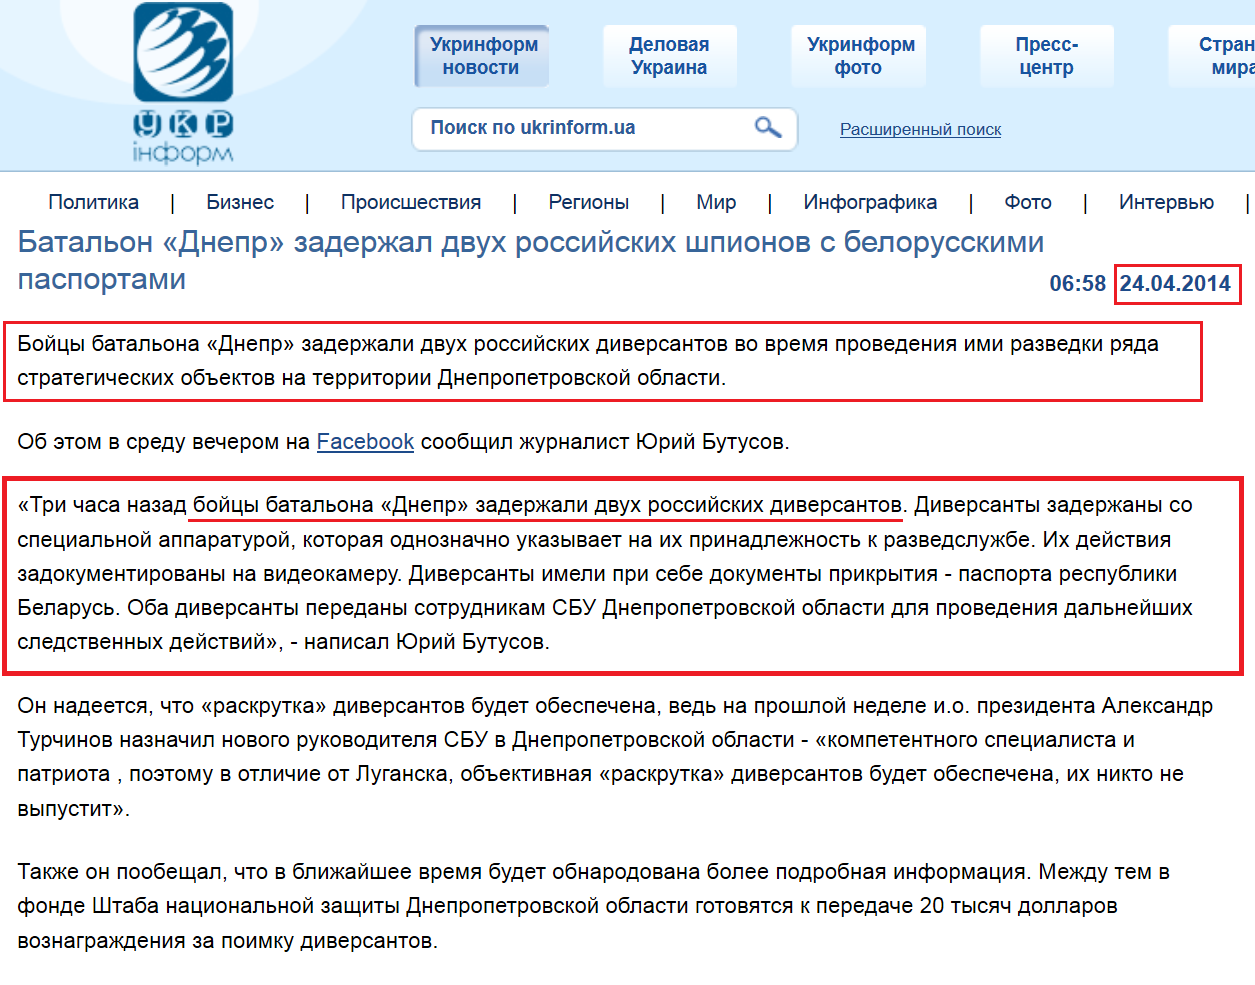 http://www.ukrinform.ua/rus/news/batalon_dnepr_zadergal_dvuh_rossiyskih_shpionov_s_belorusskimi_pasportami_1627042